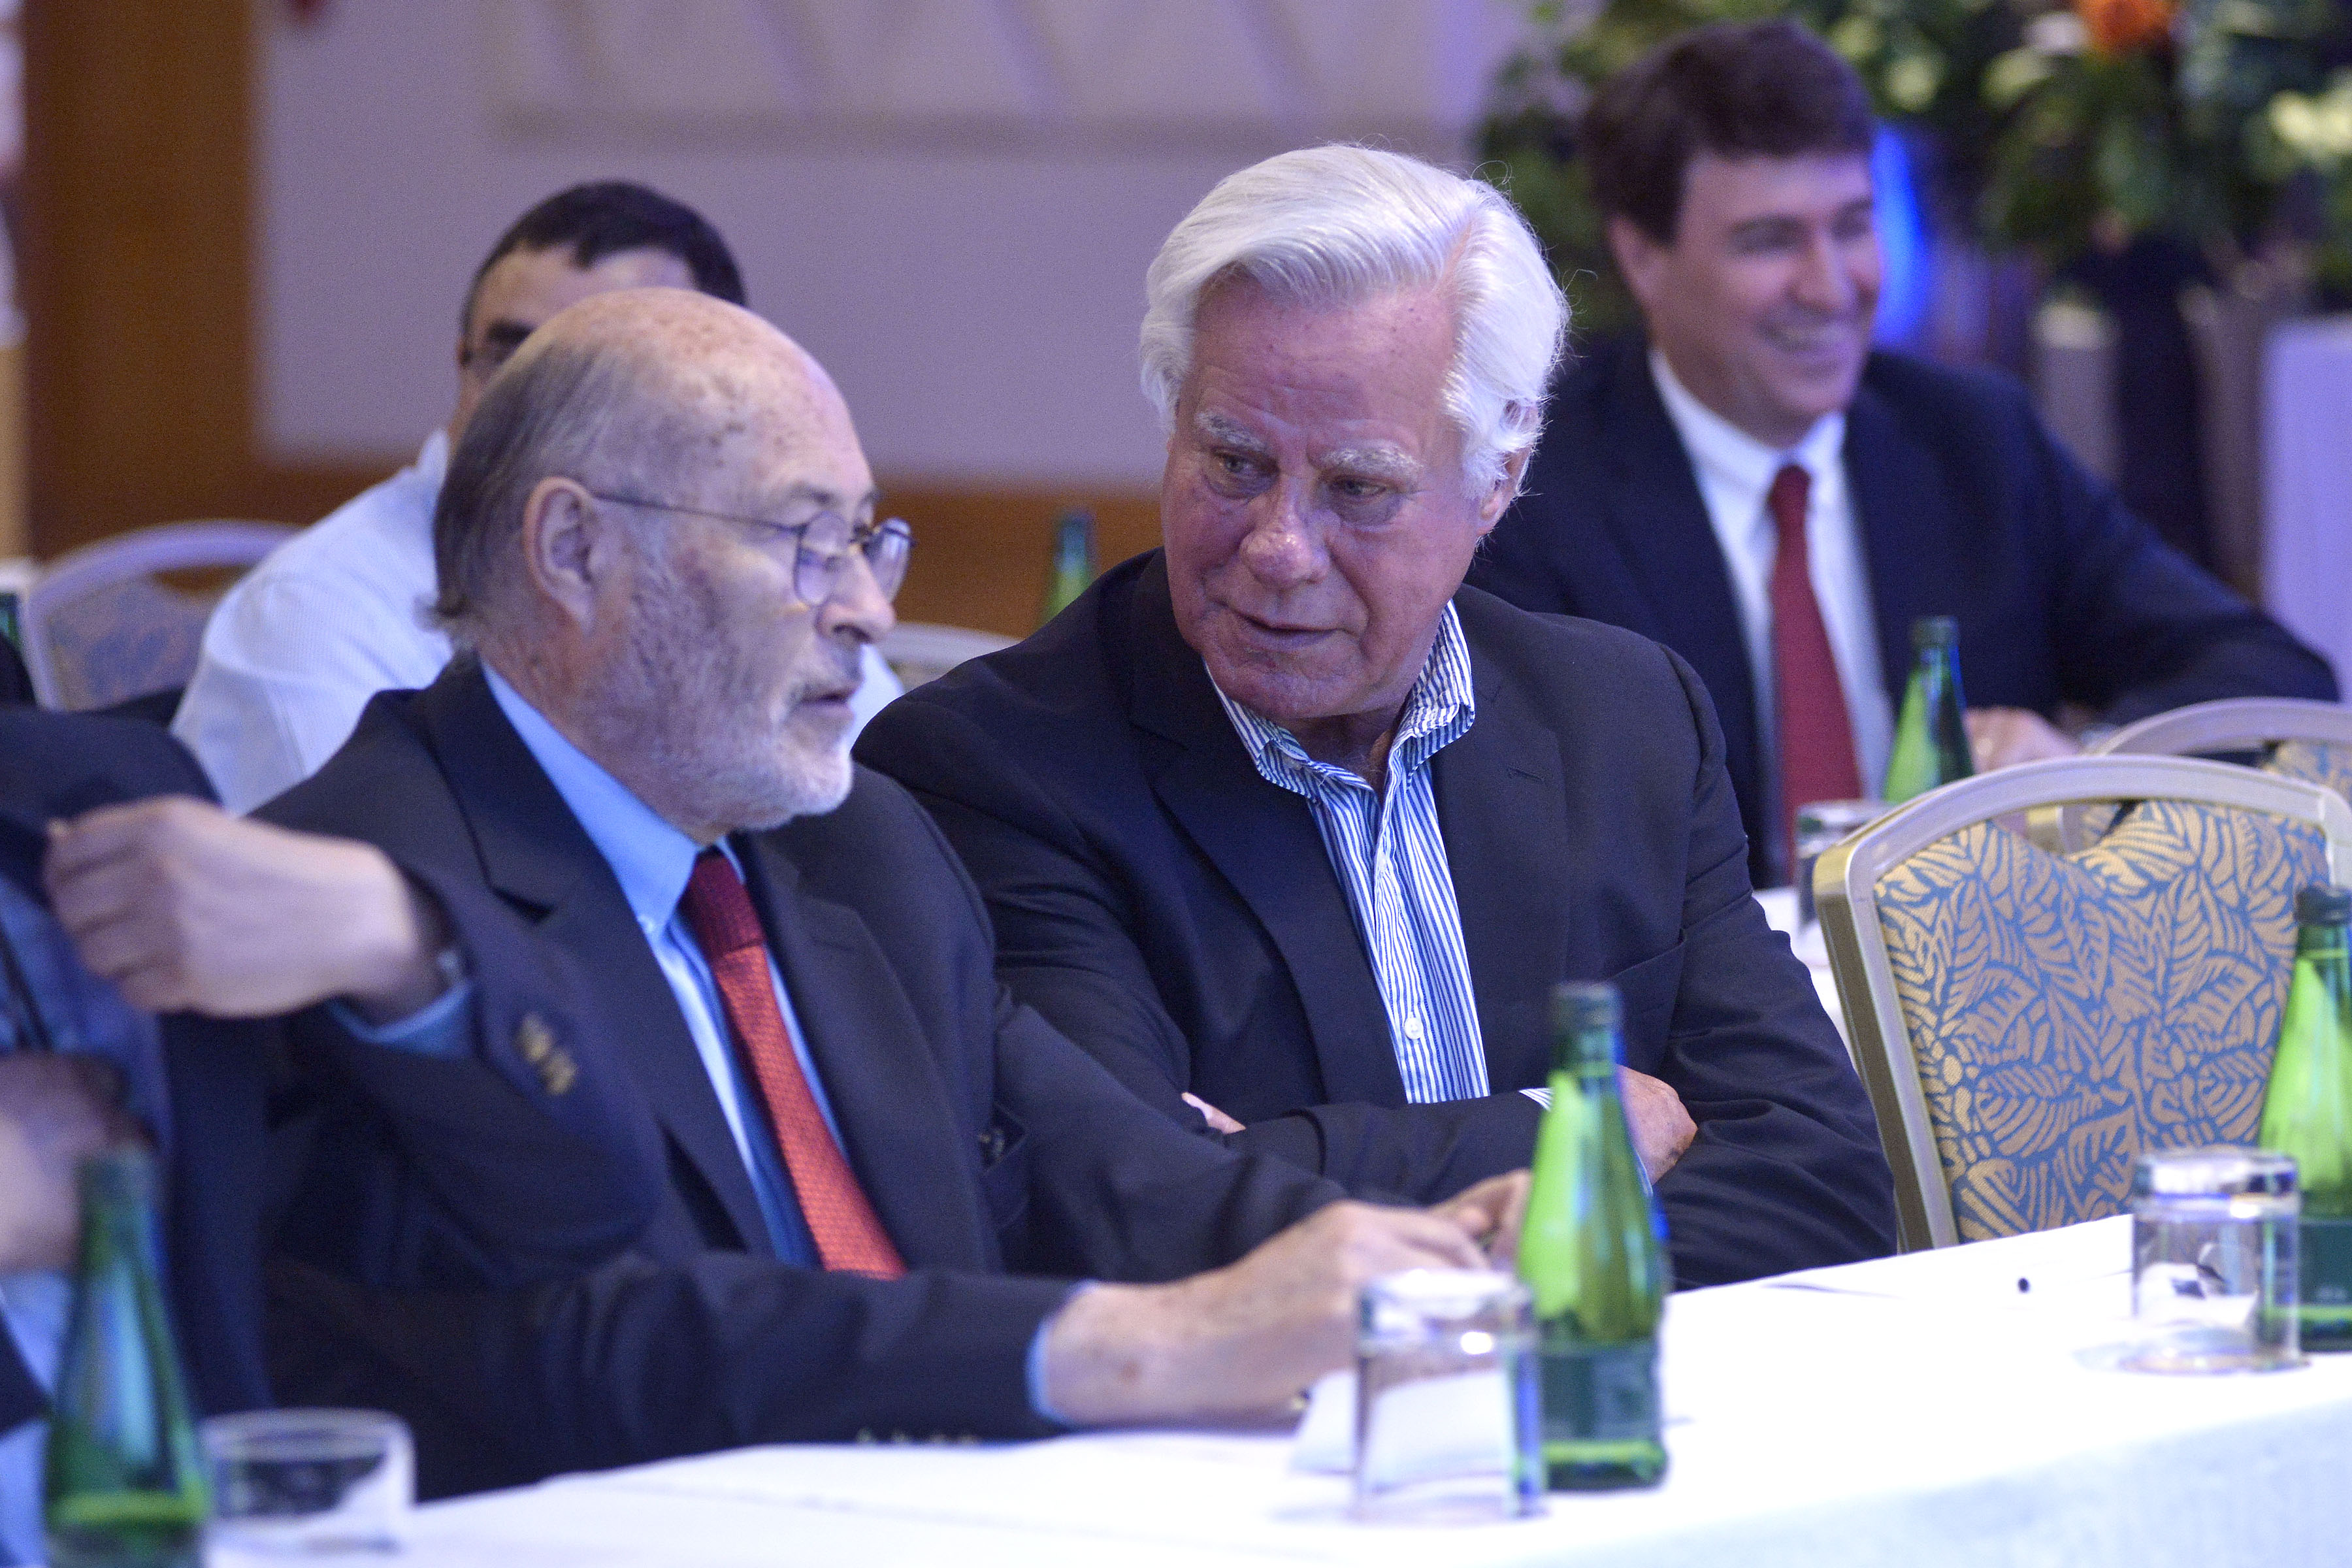 Angel Sartori, National Director of SAG; next to Carlos Seemann, Vice-President of ASPROCER.
